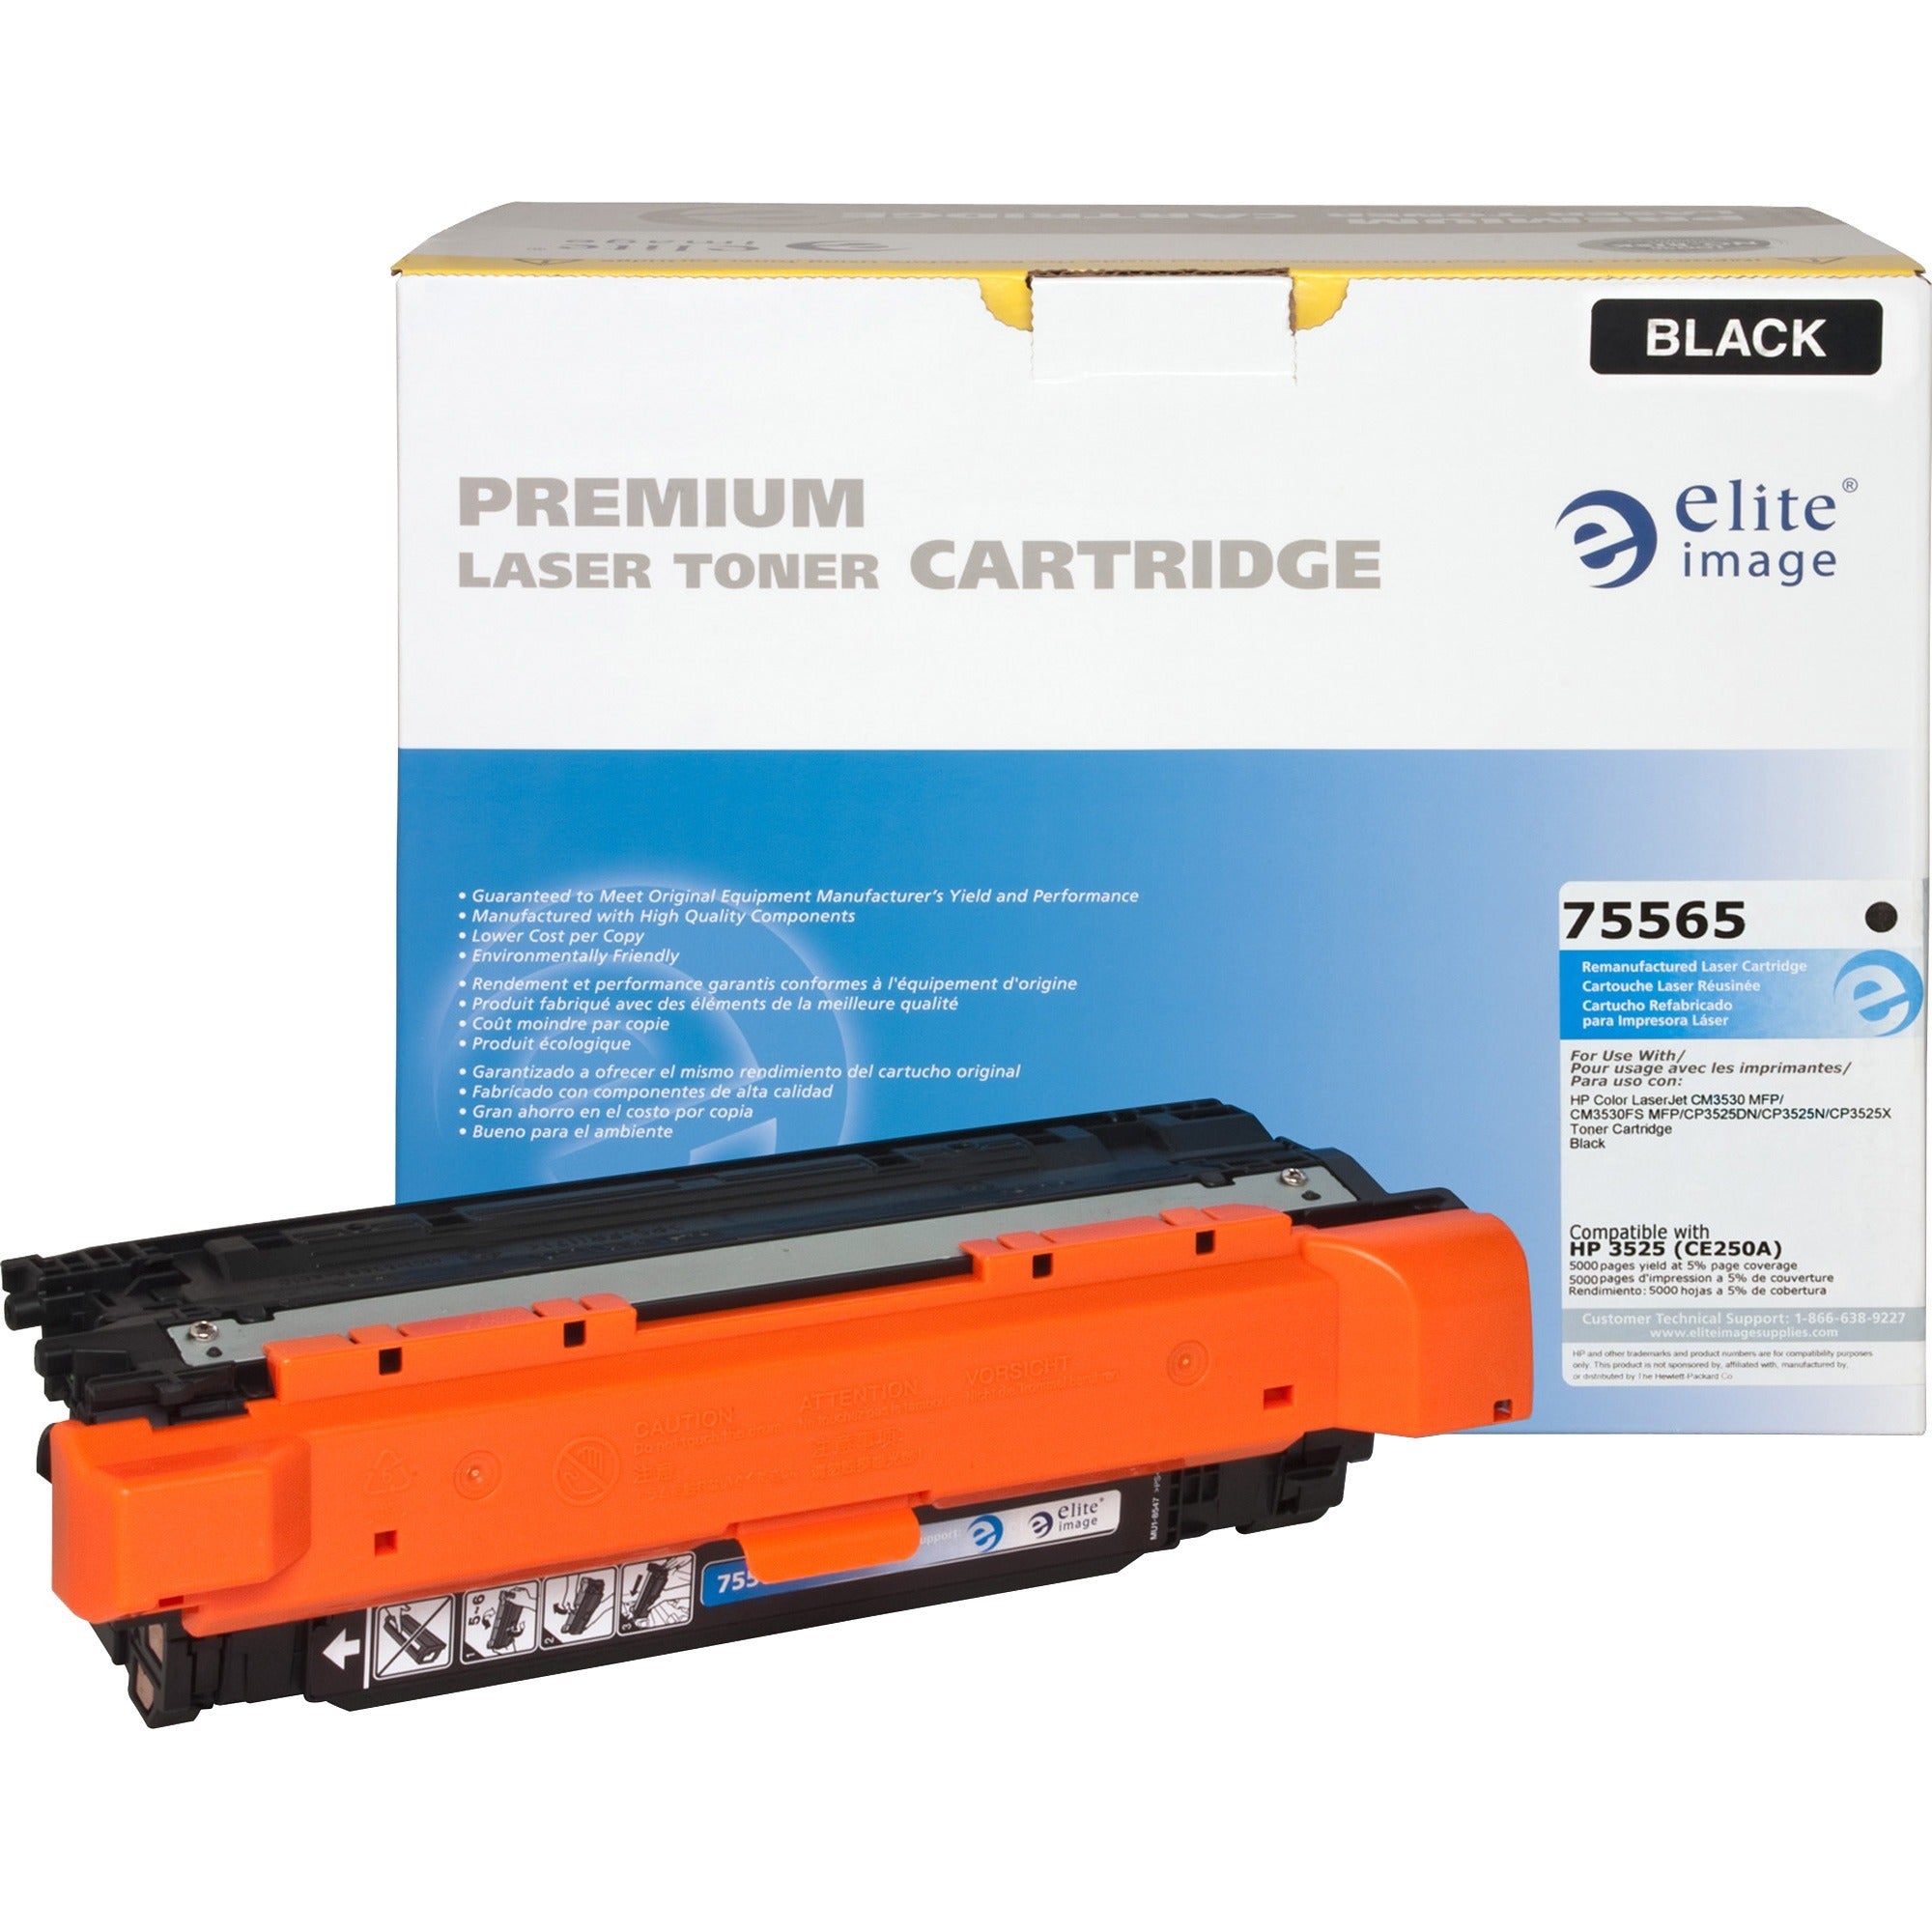 Elite Image Remanufactured Laser Toner Cartridge - Alternative for HP 504A (CE250A) - Black - 1 Each - 5000 Pages - 1